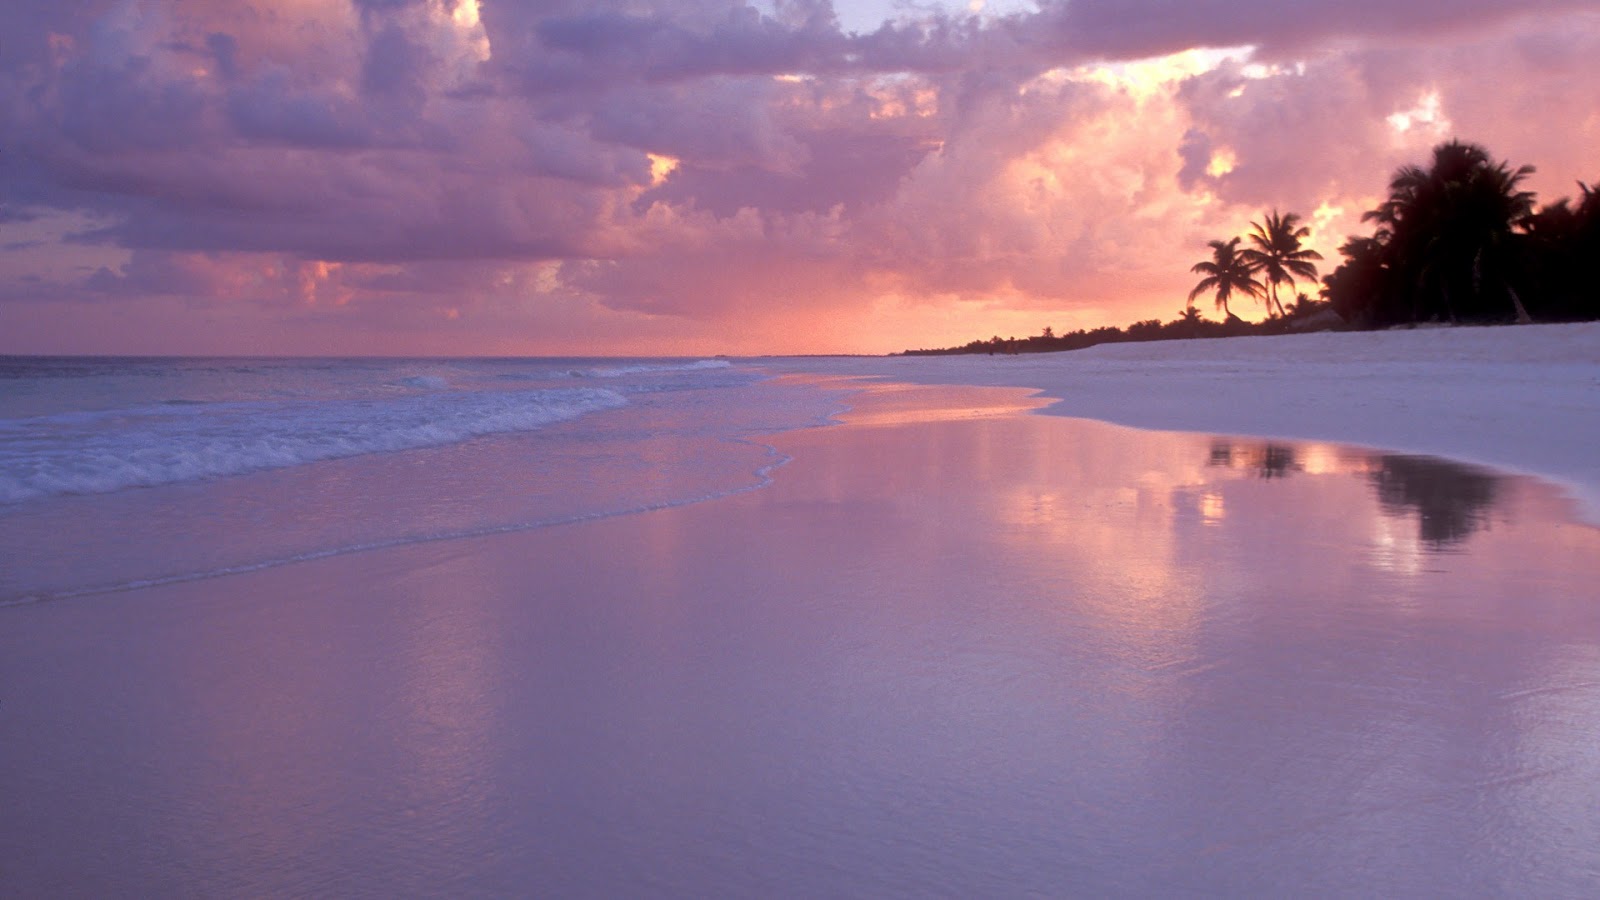 Beach Sunset In Cancun Mexico Wallpaper